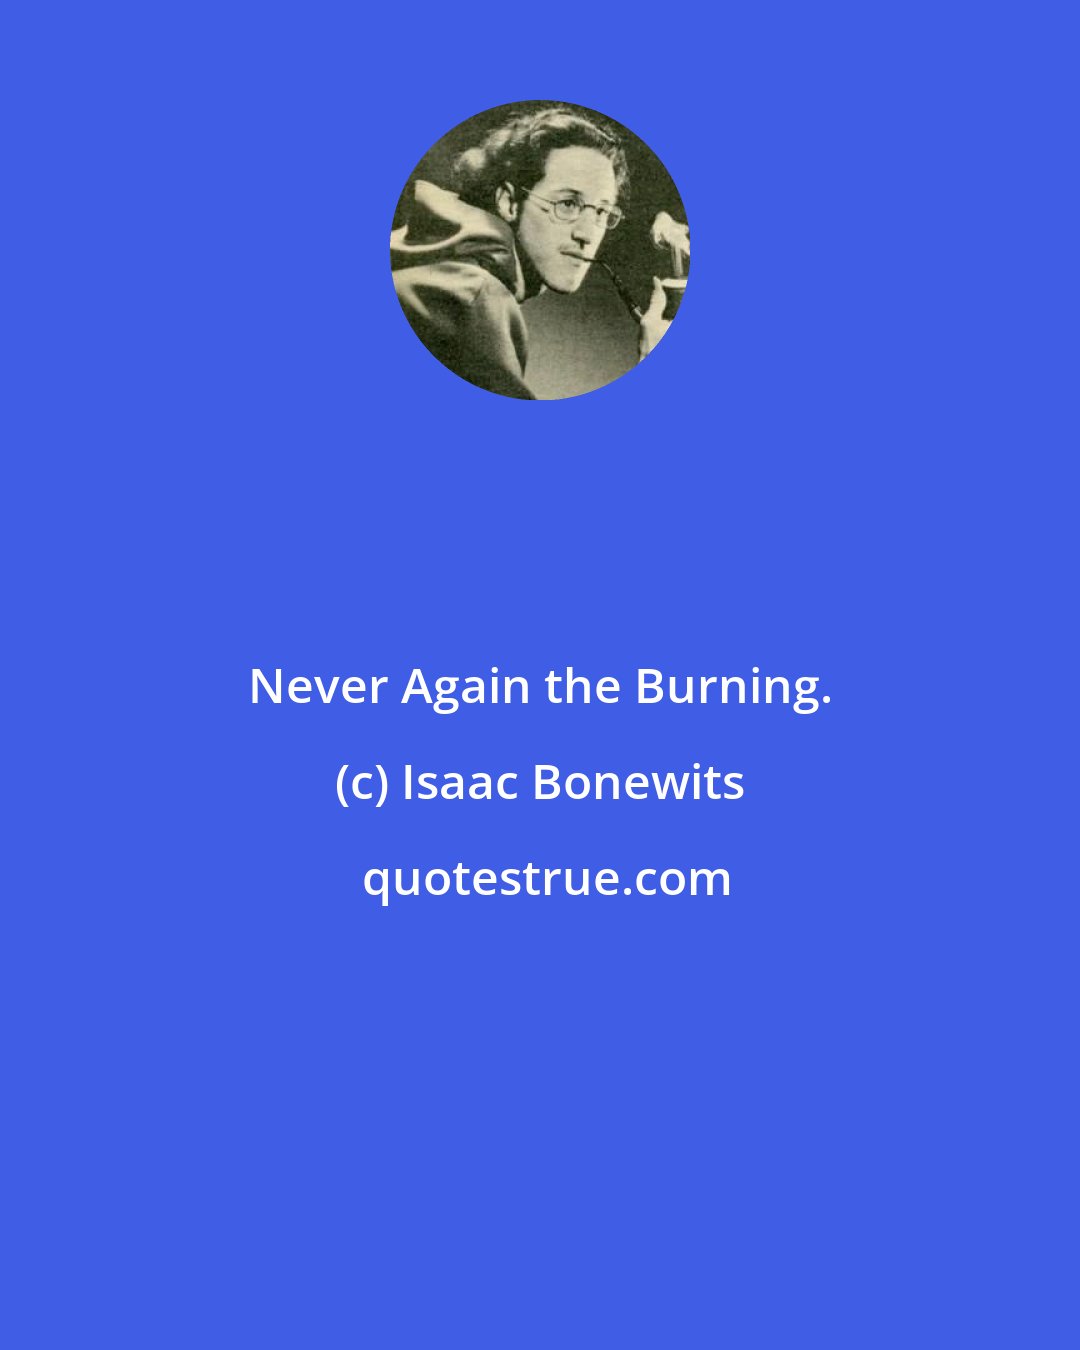 Isaac Bonewits: Never Again the Burning.